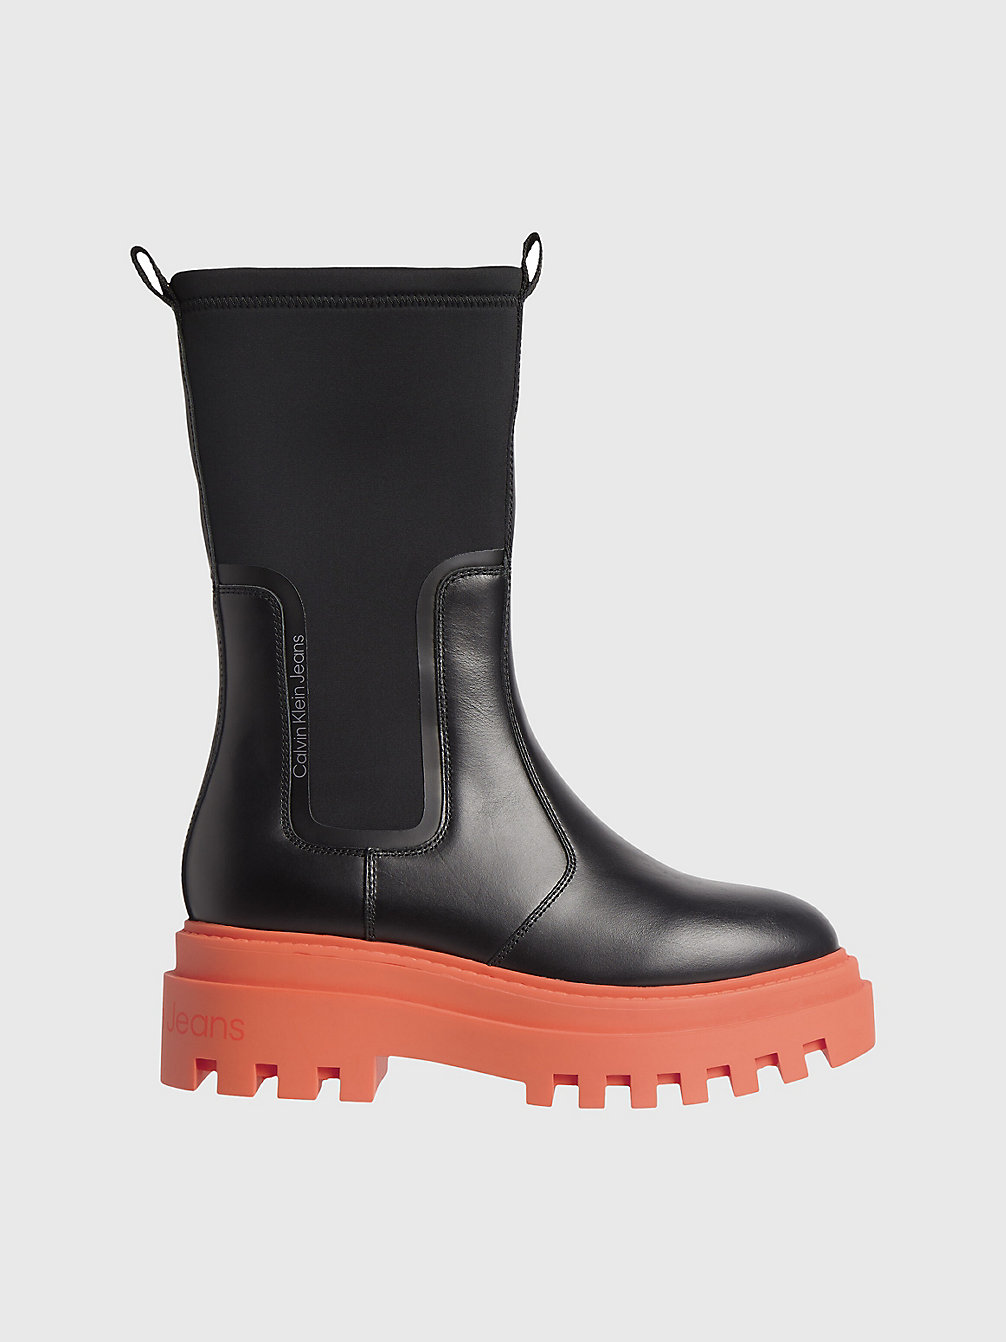 BLACK > Leder-Boots Mit Plateau-Sohle > undefined Damen - Calvin Klein